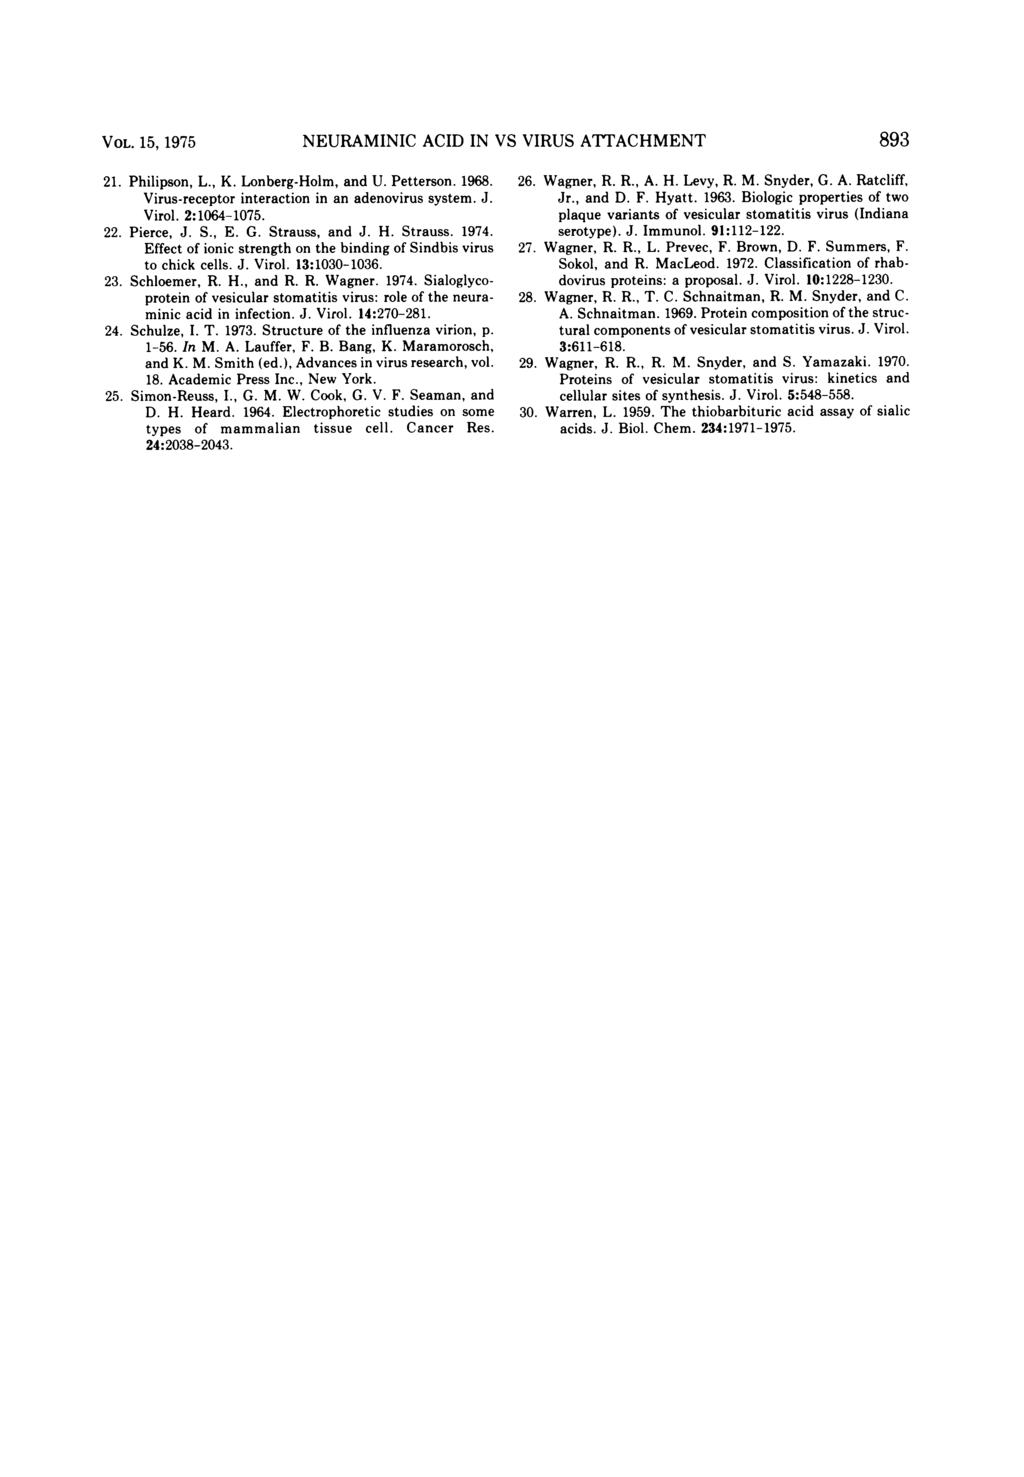 VOL. 15, 1975 NEURAMINIC ACID IN VS VIRUS ATTACHMENT 893 21. Philipson, L., K. Lonberg-Holm, and U. Petterson. 1968. Virus-receptor interaction in an adenovirus system. J. Virol. 2:164-175. 22.